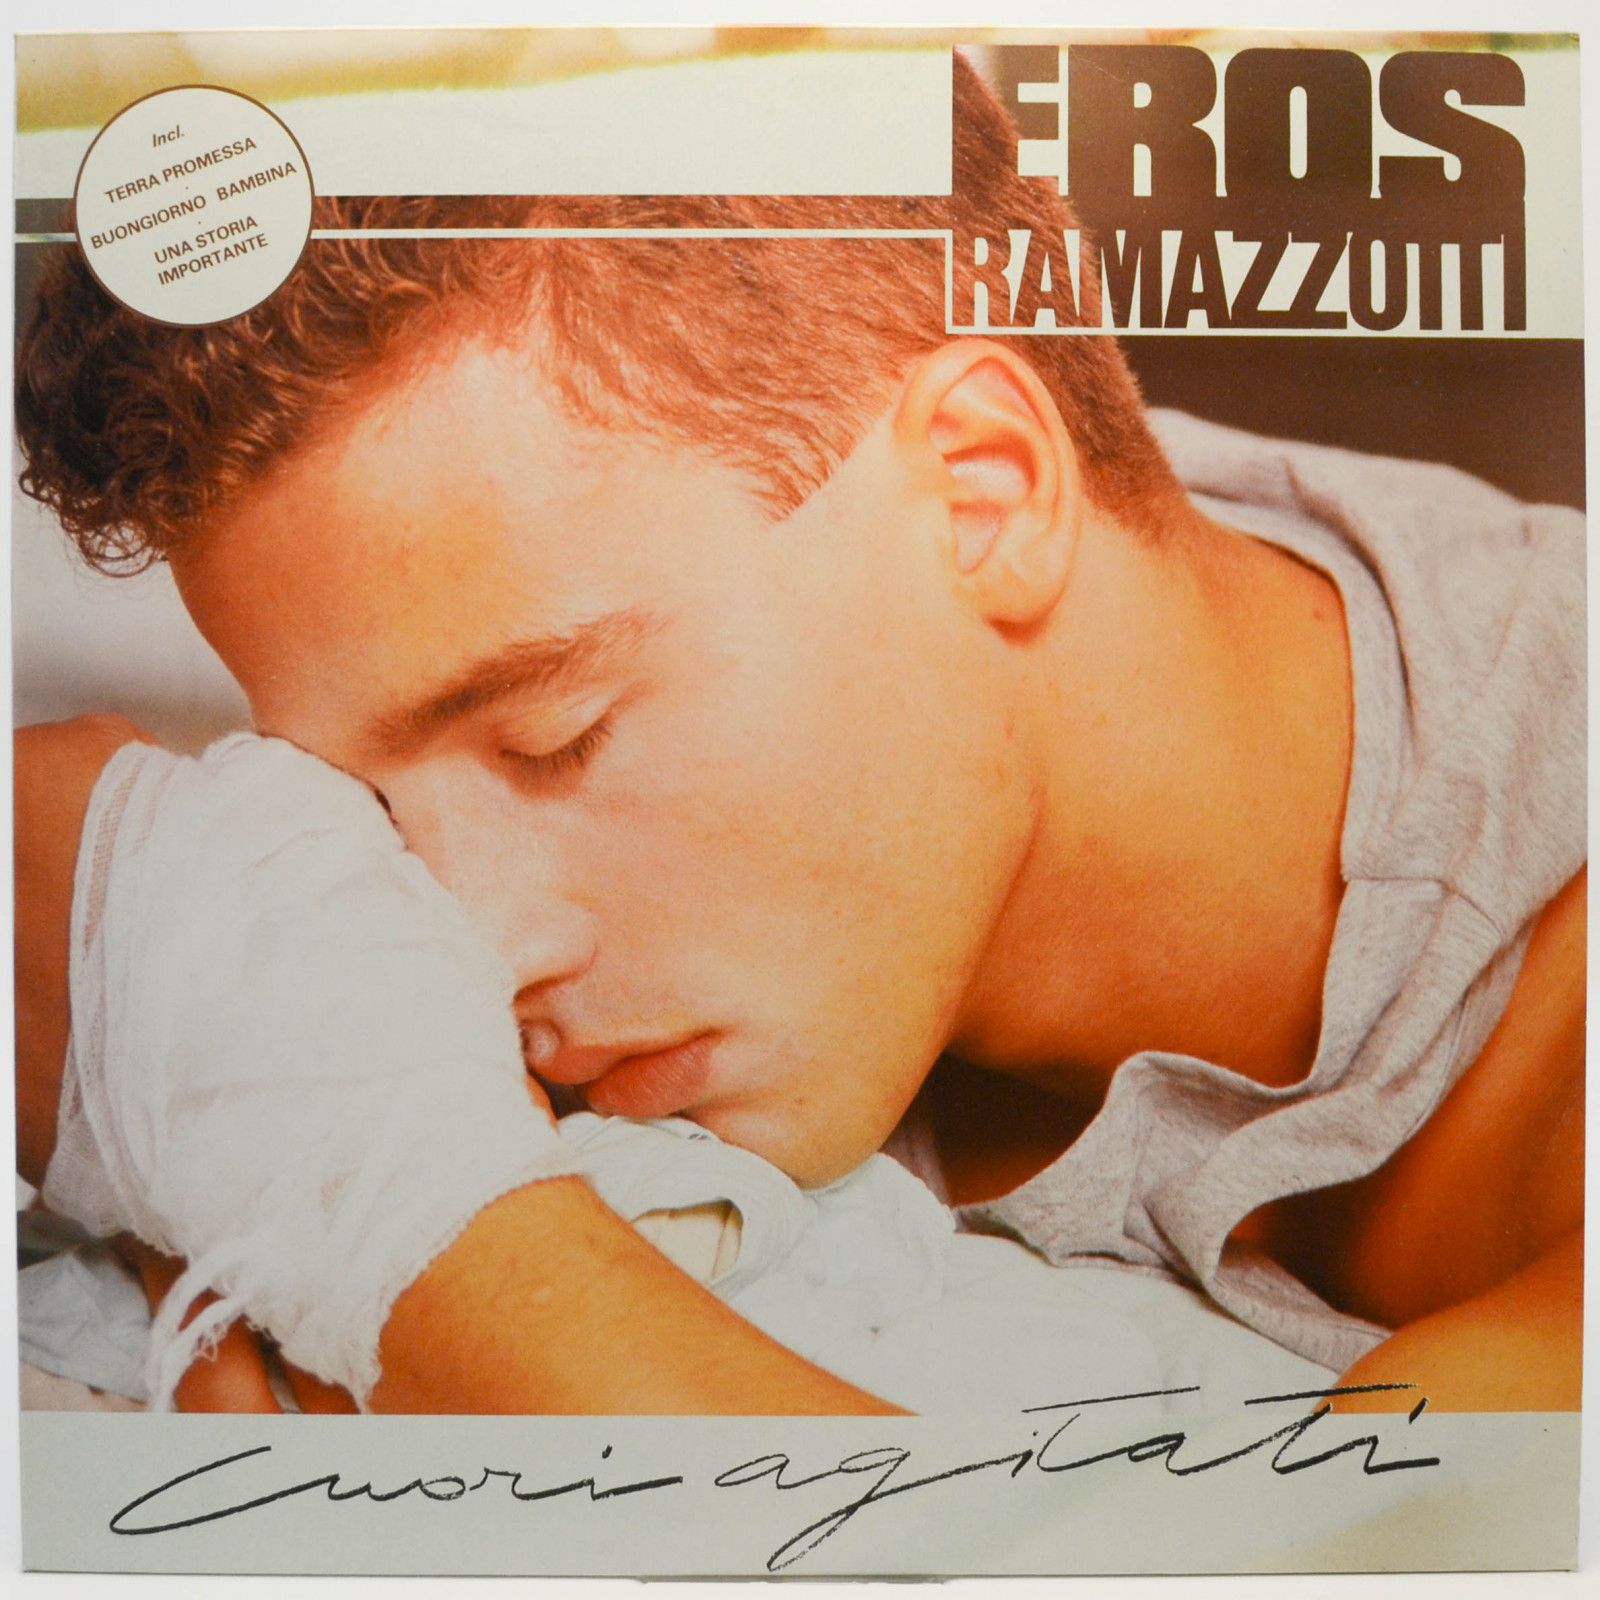 Eros Ramazzotti — Cuori Agitati, 1986